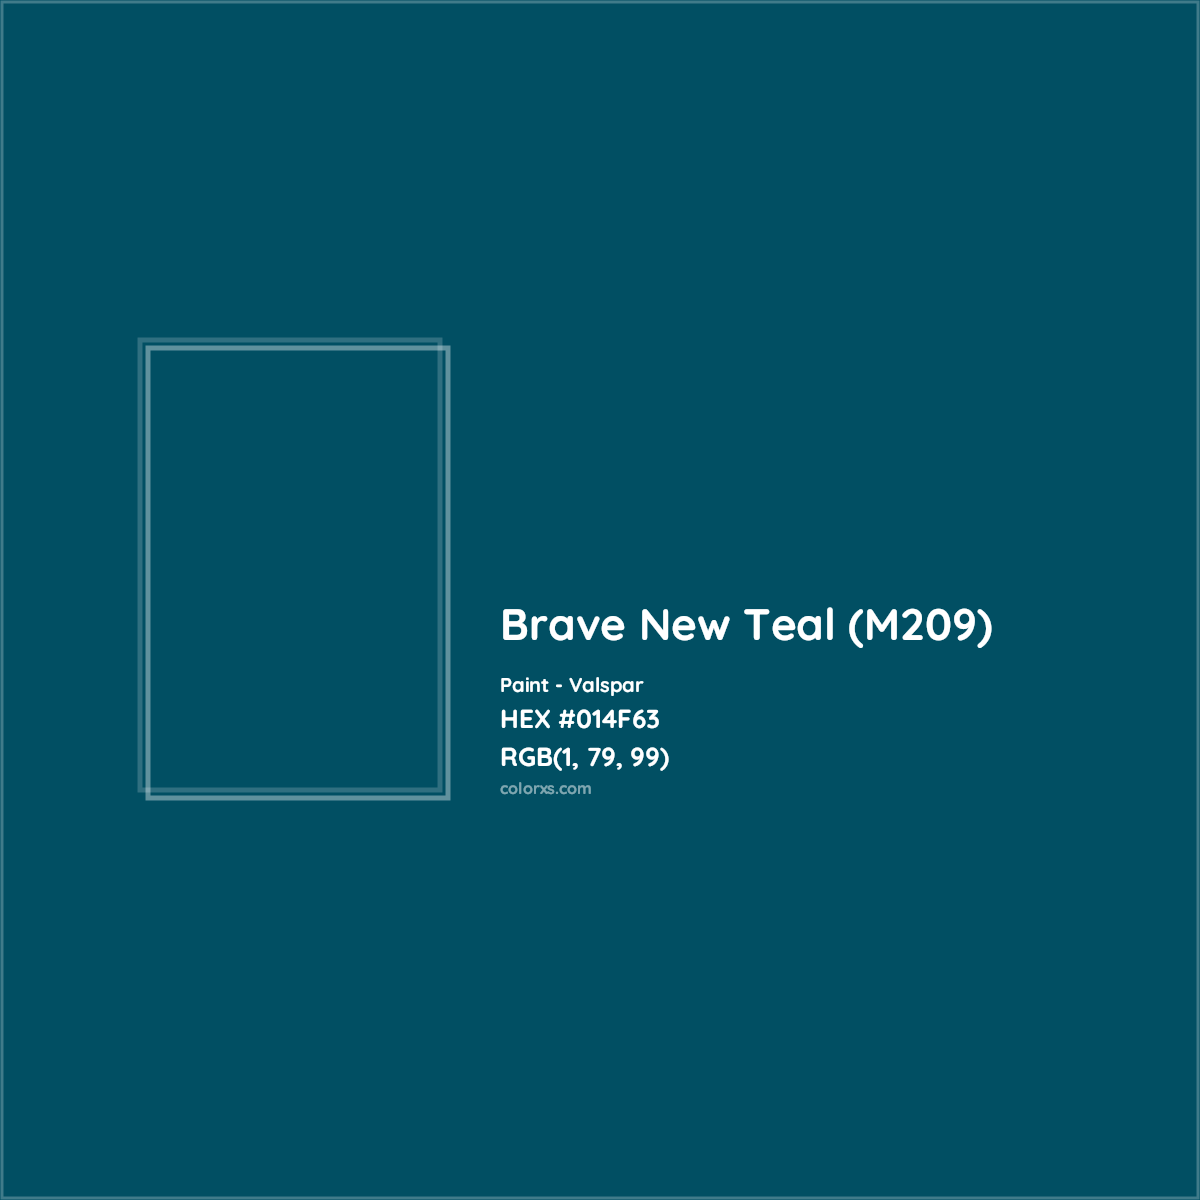 HEX #014F63 Brave New Teal (M209) Paint Valspar - Color Code